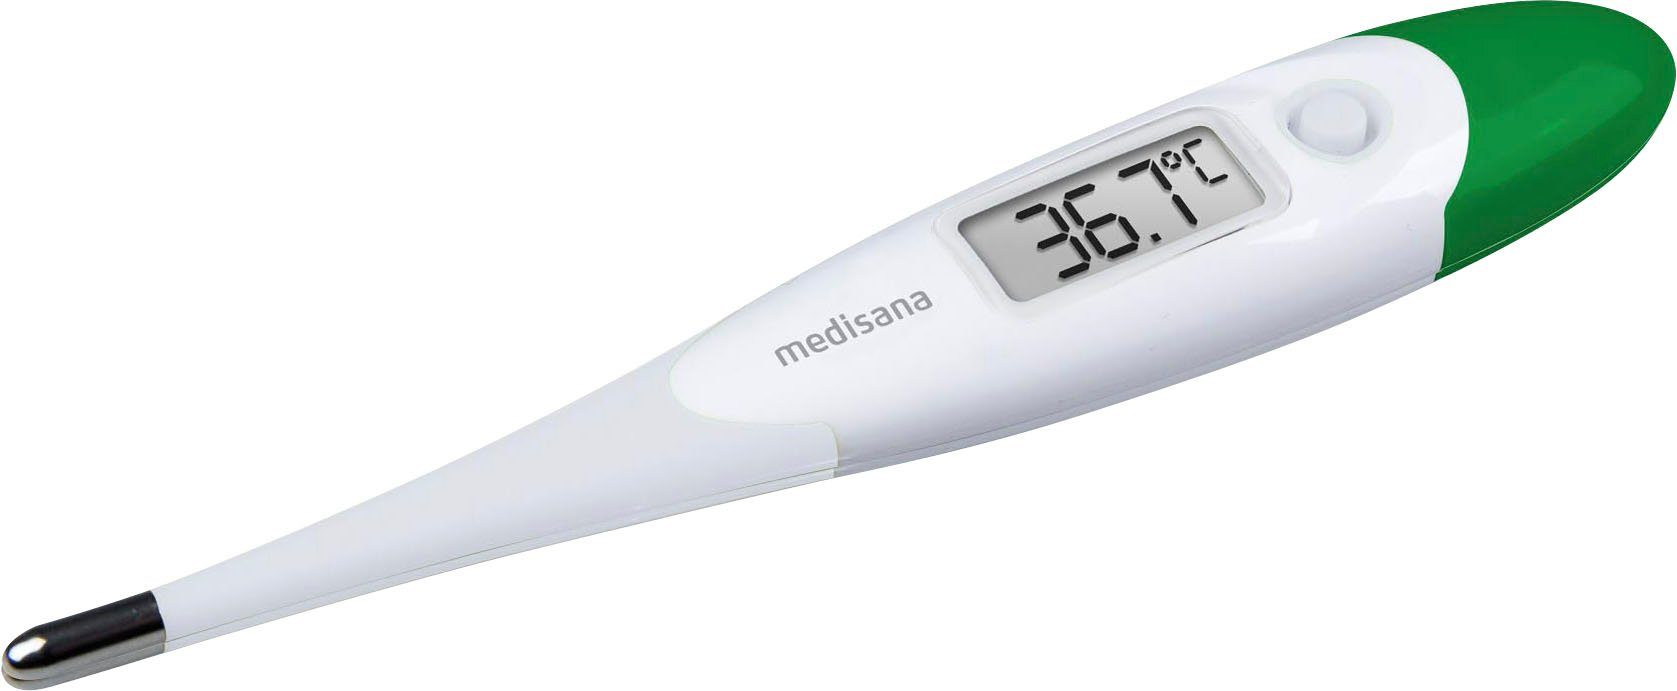 Medisana TM700 Fieberthermometer